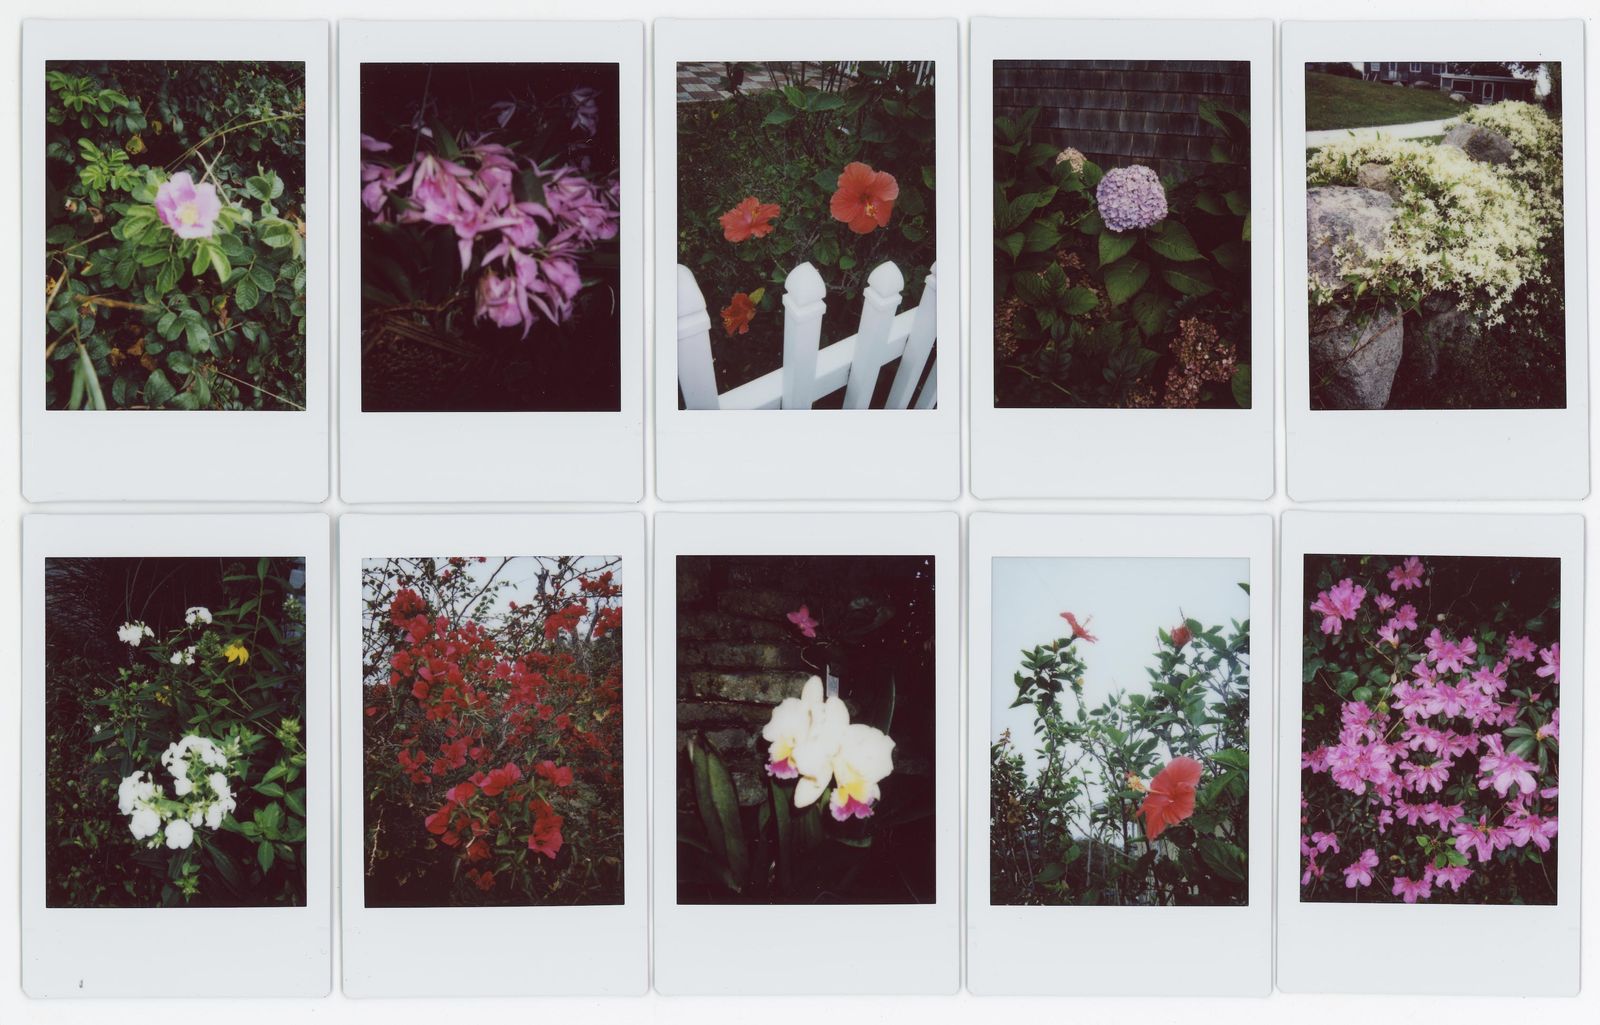 © RACHEL TREIDE - "A Minute Fraction of All the Flowers I've Ever Seen," photographs 31-40